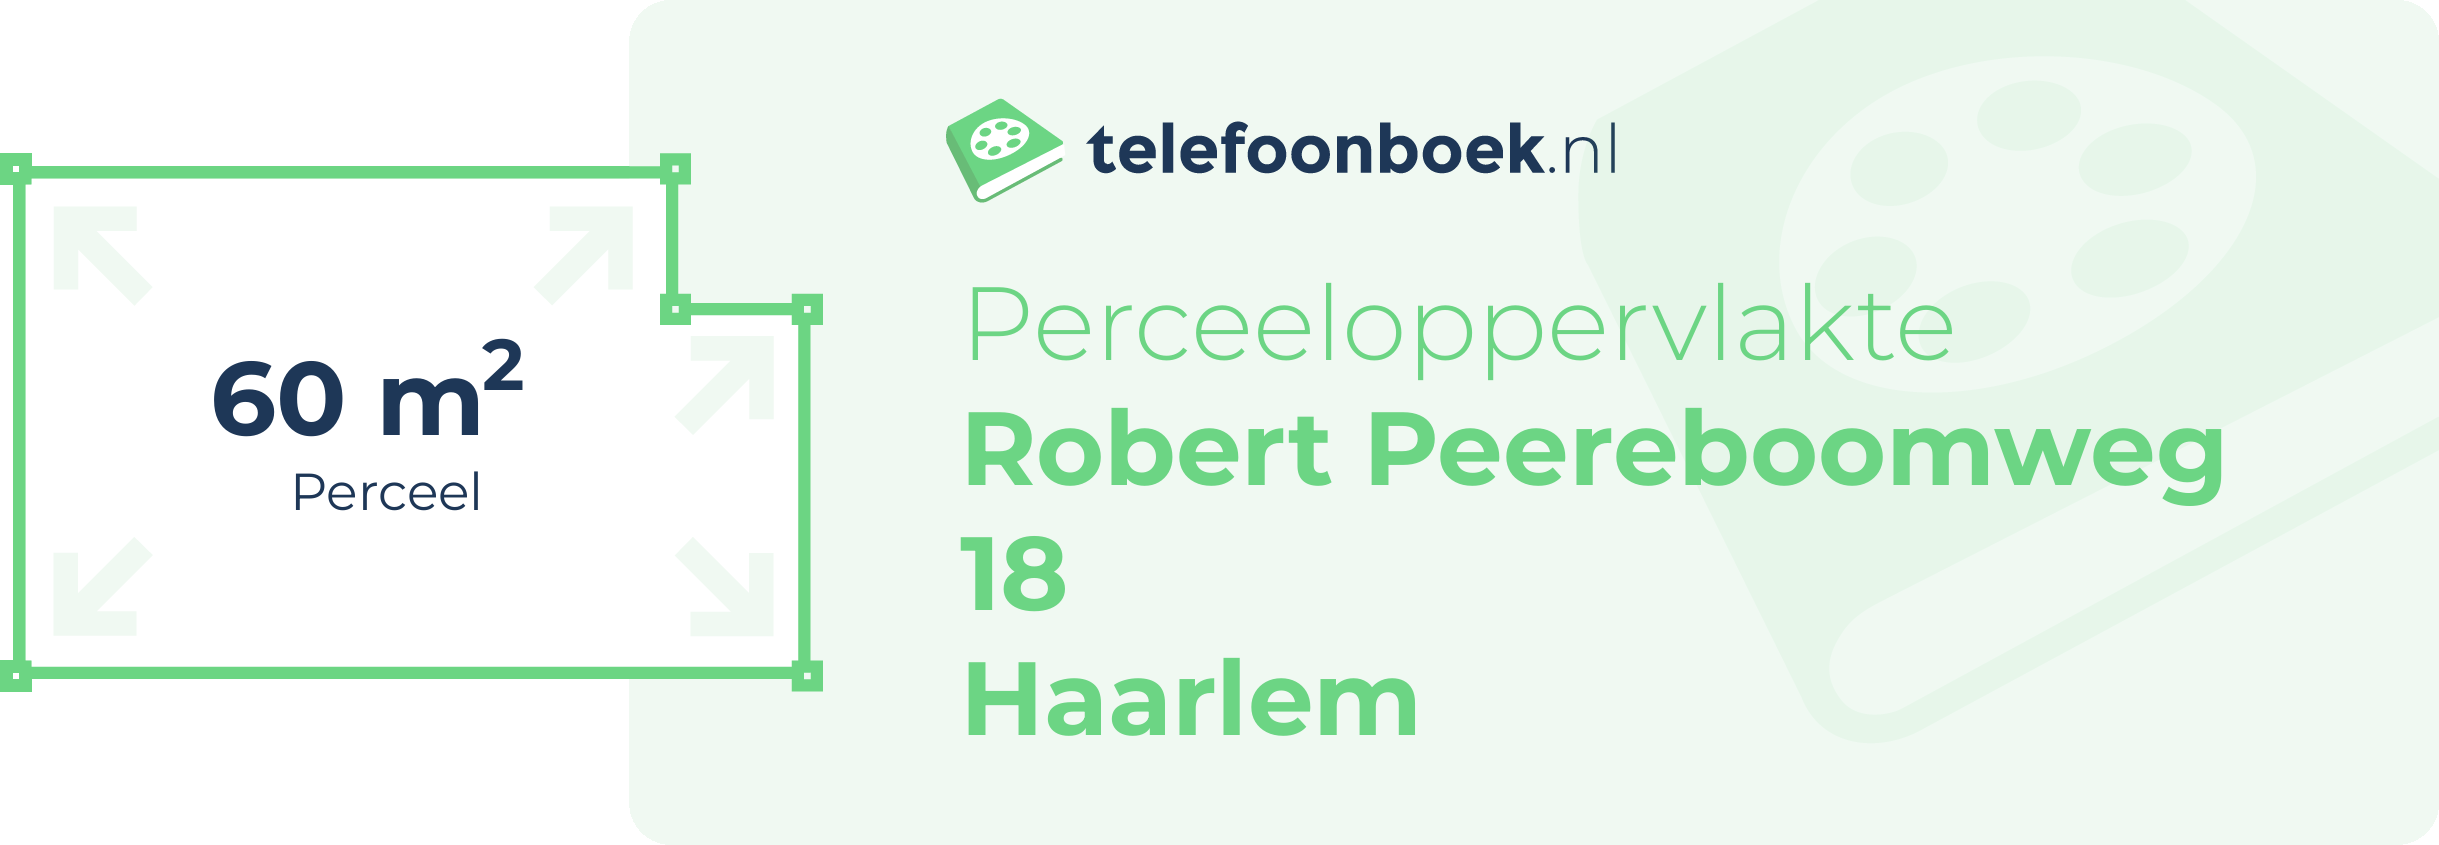 Perceeloppervlakte Robert Peereboomweg 18 Haarlem